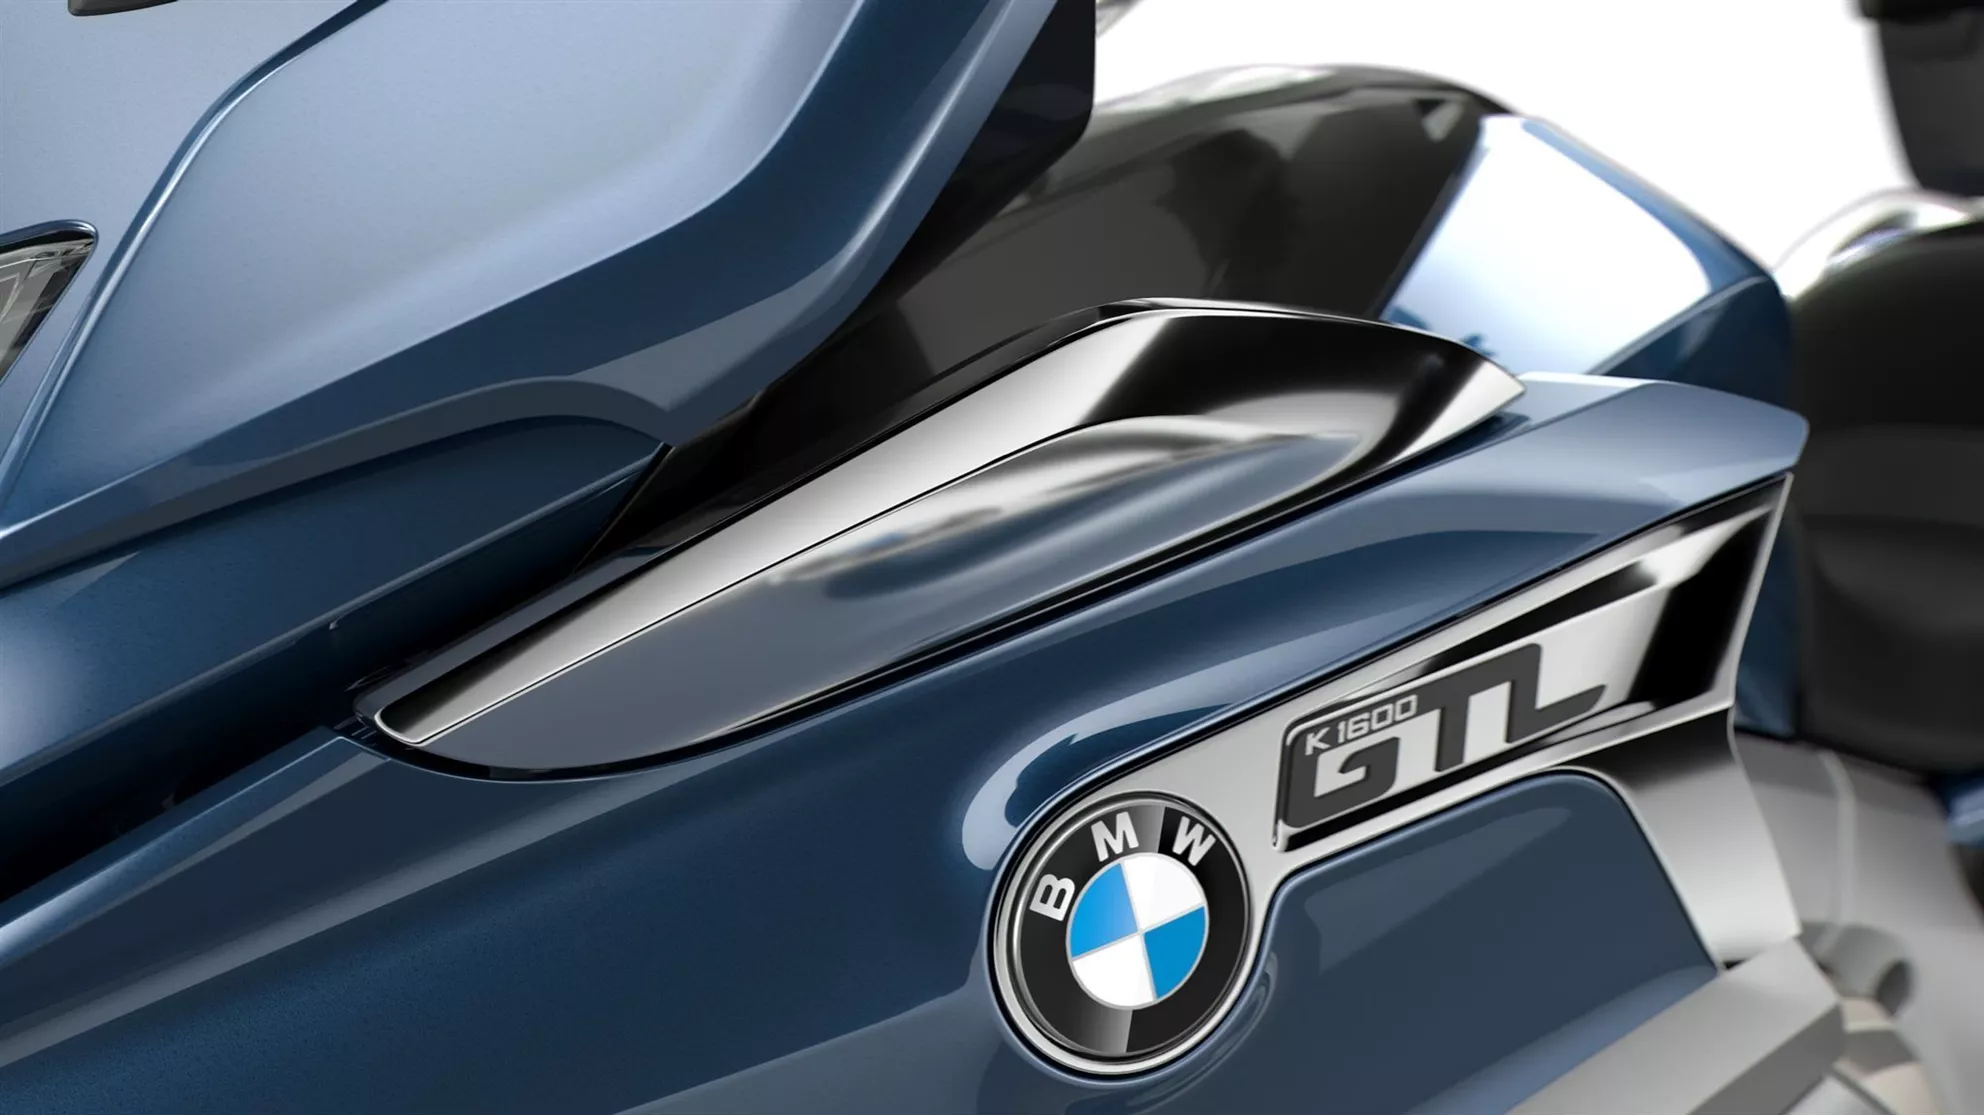 BMW K 1600 GTL - Image 16